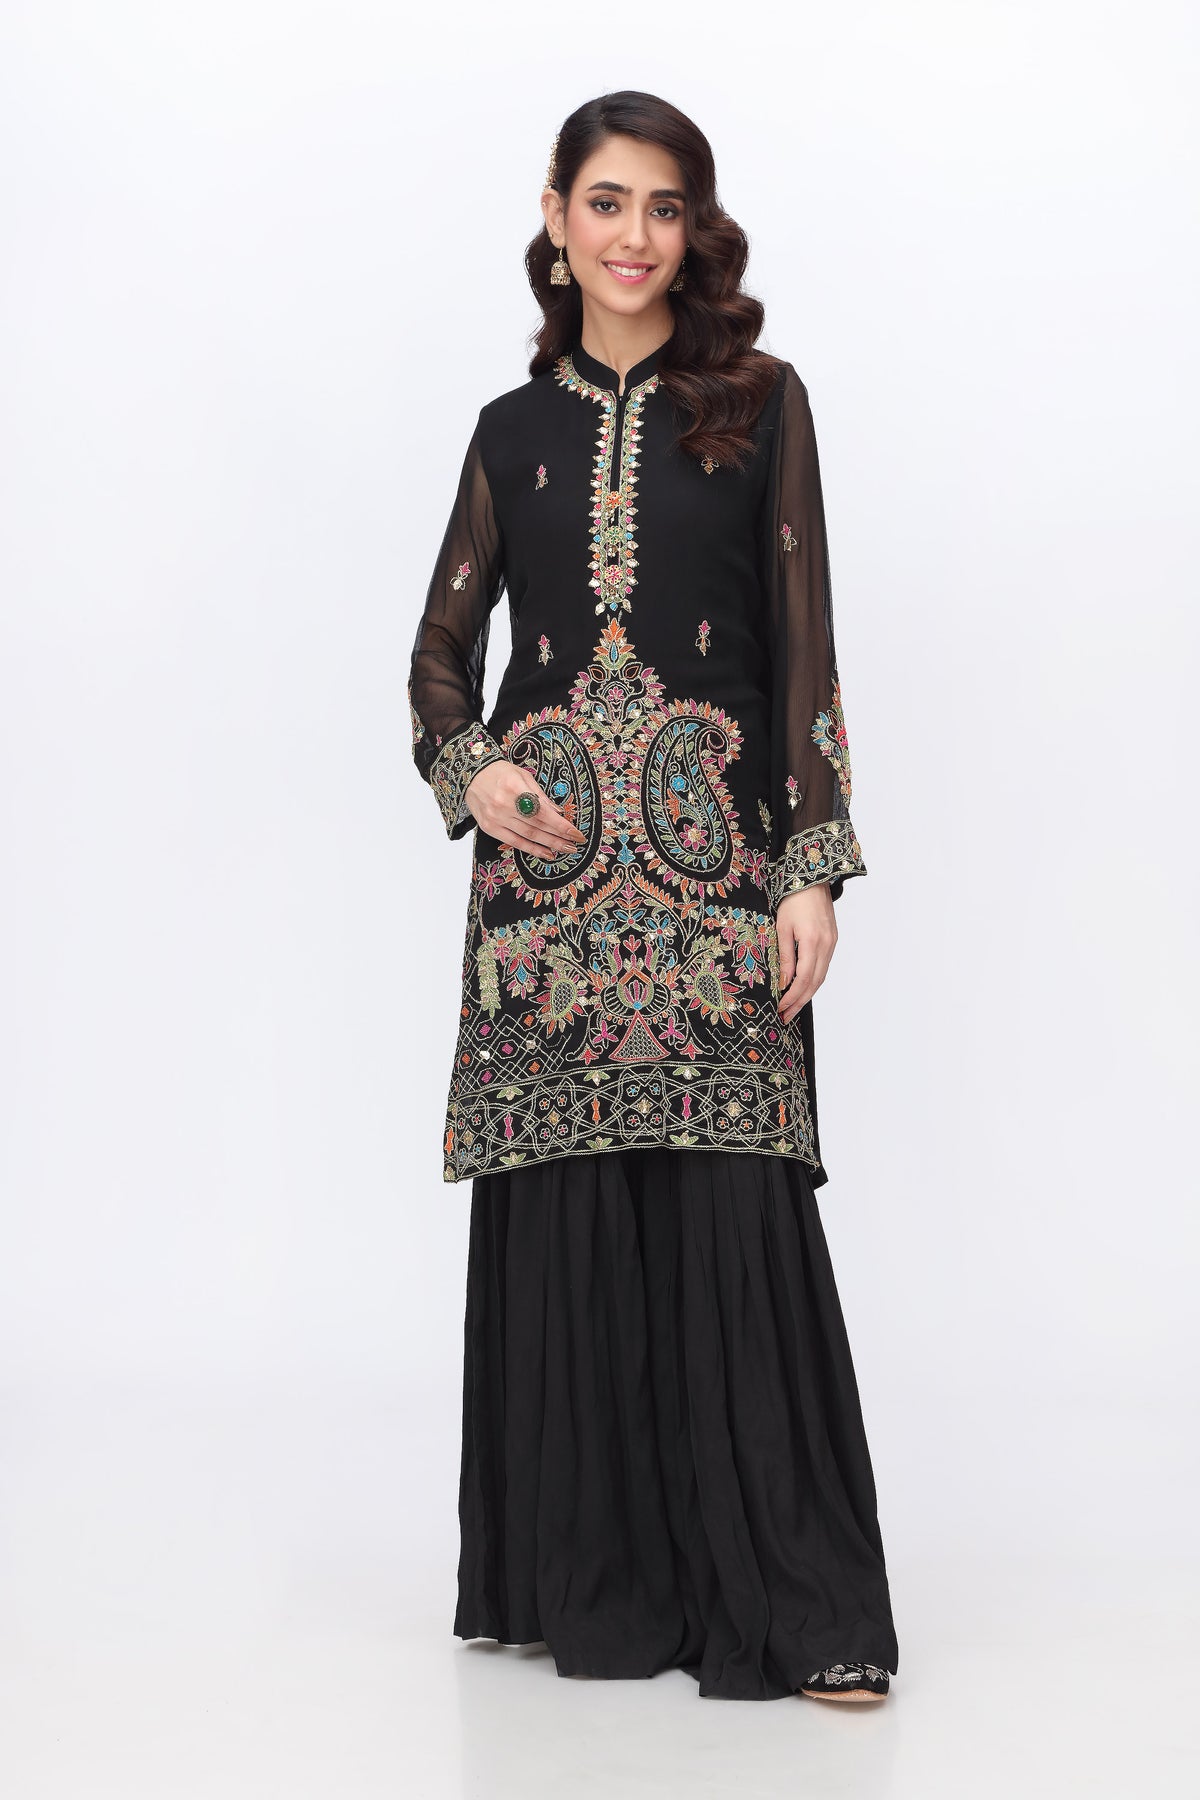 Twin Paisleys in Black coloured Pak Chiffon fabric